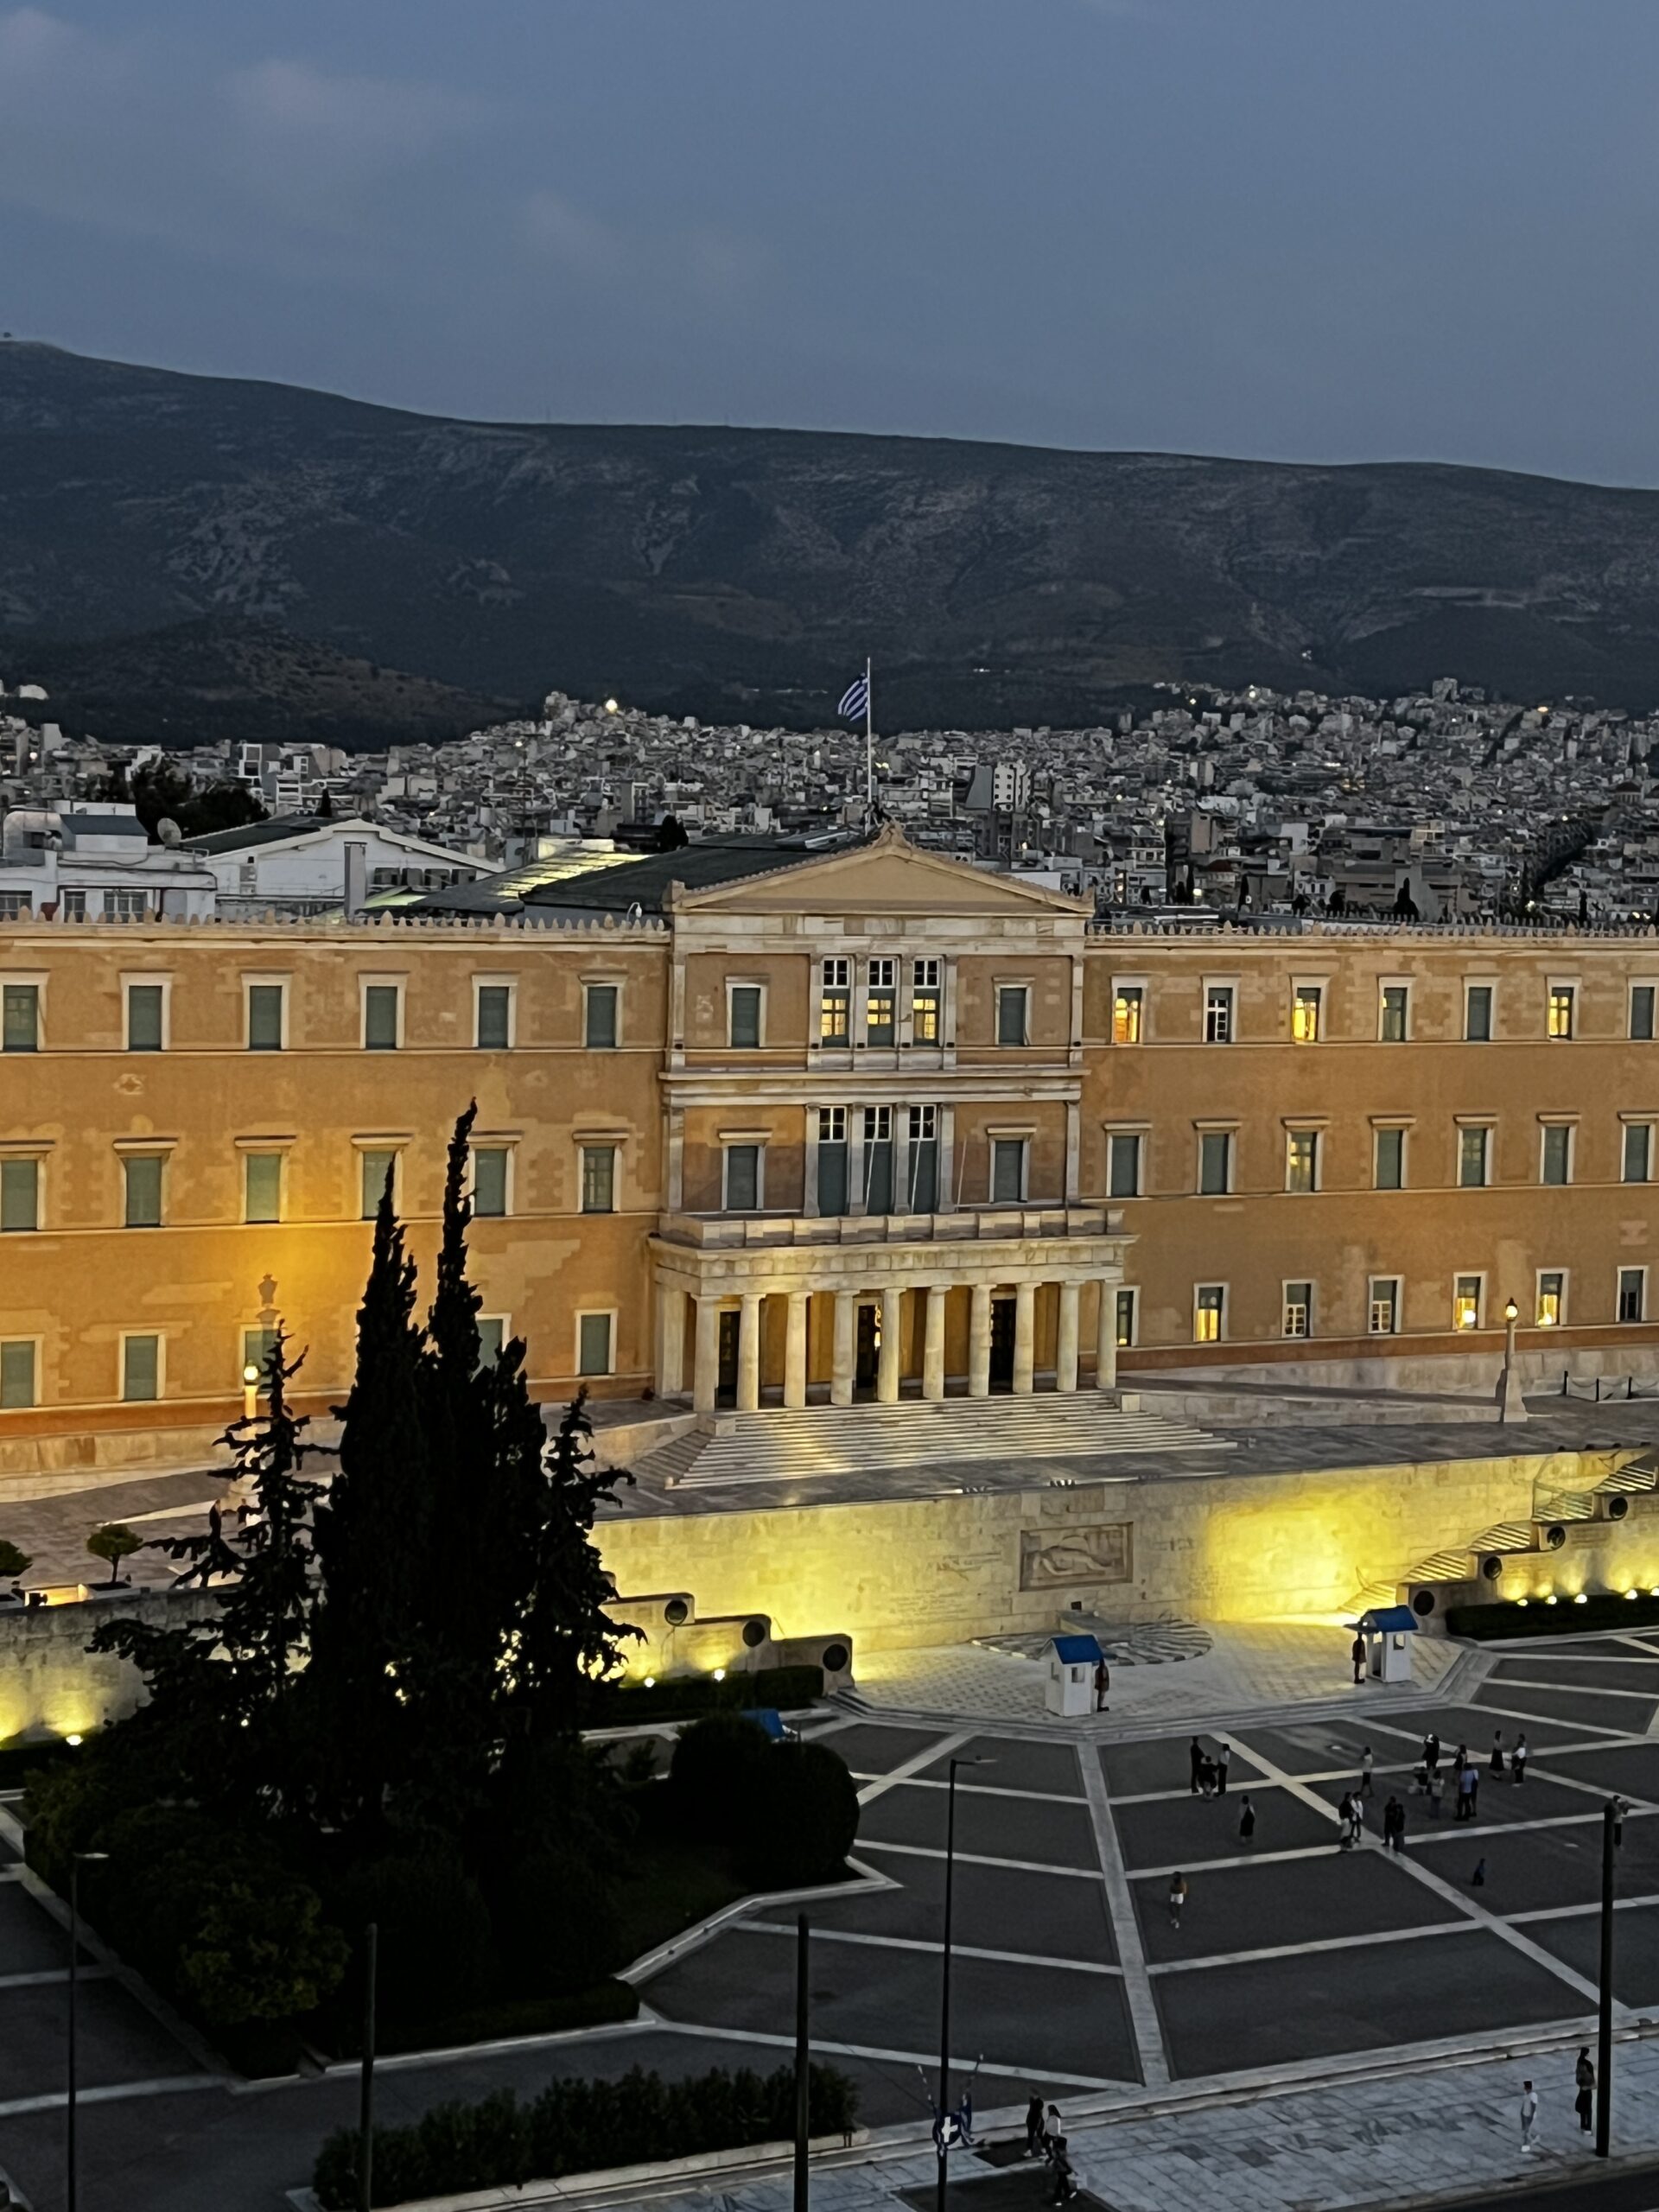 Athens Parliament Building at night